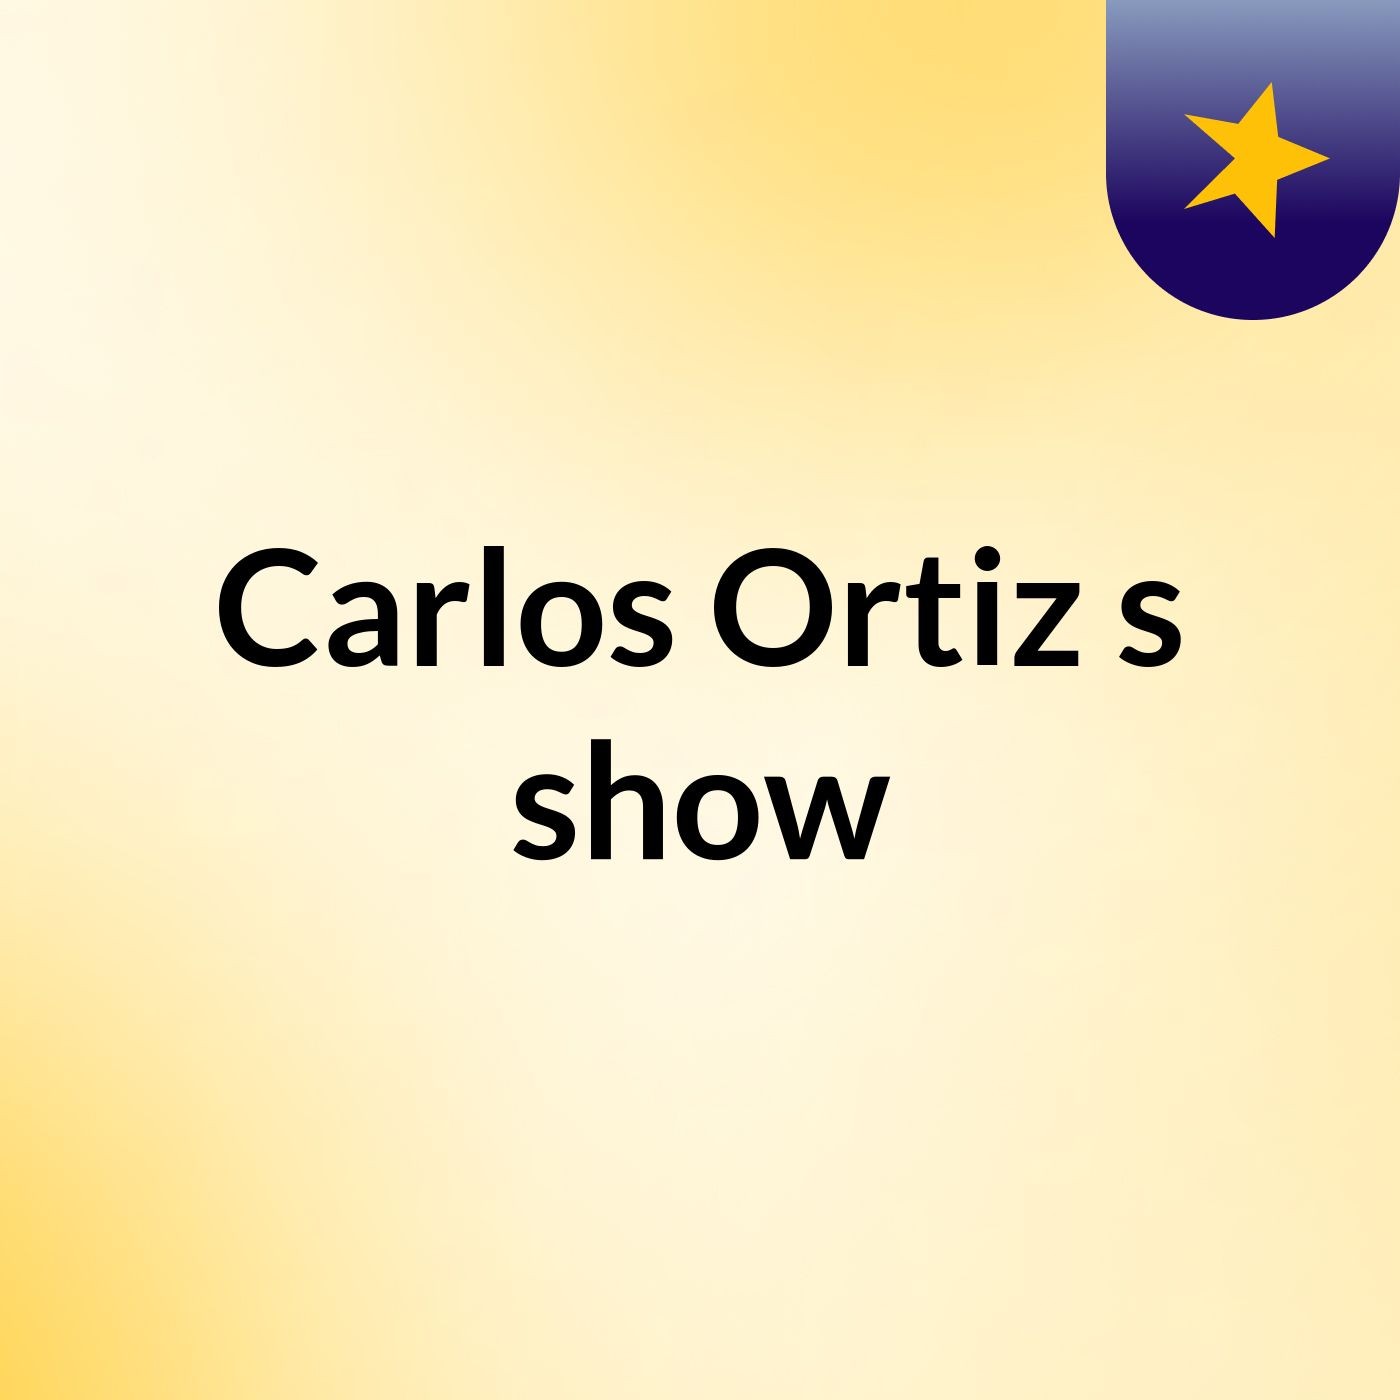 Carlos Ortiz's show